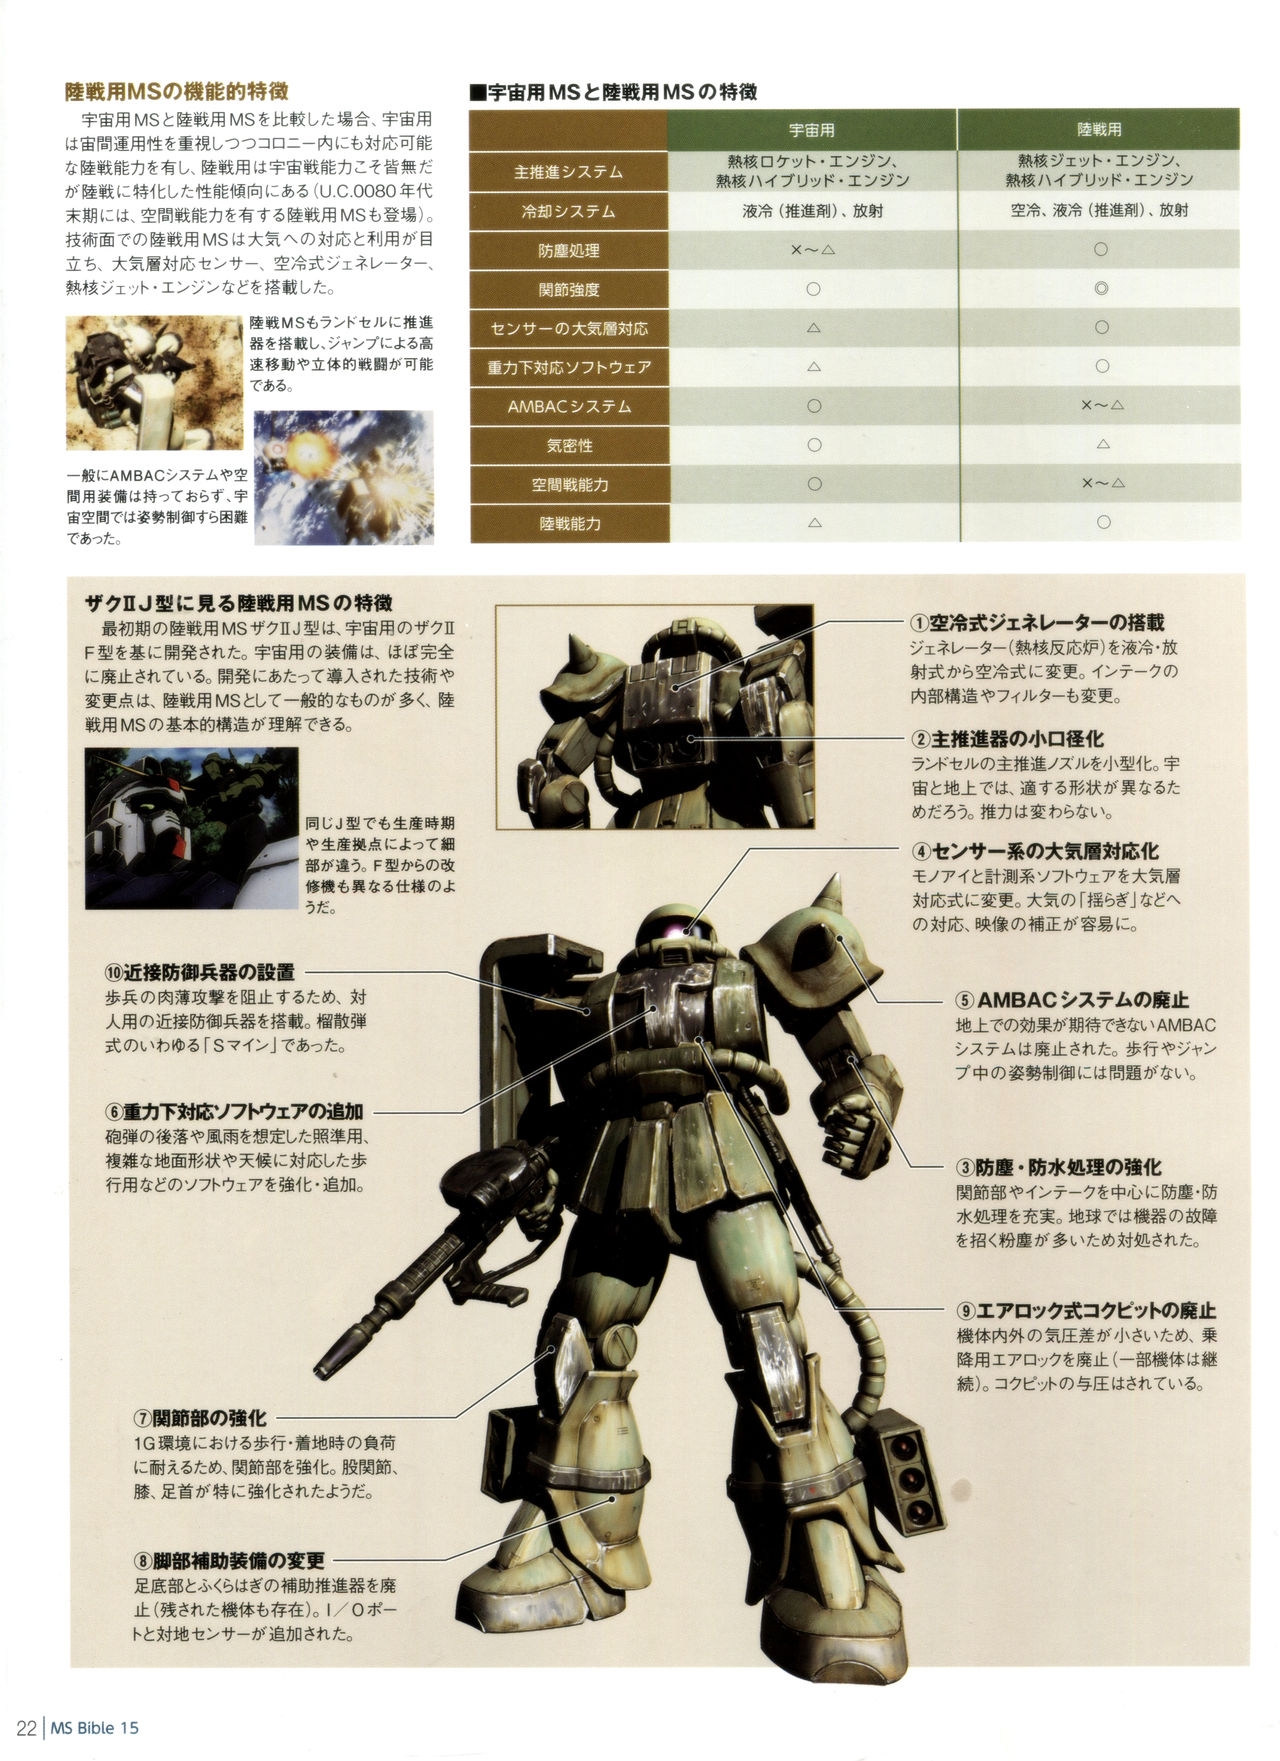 Gundam Mobile Suit Bible 15 23